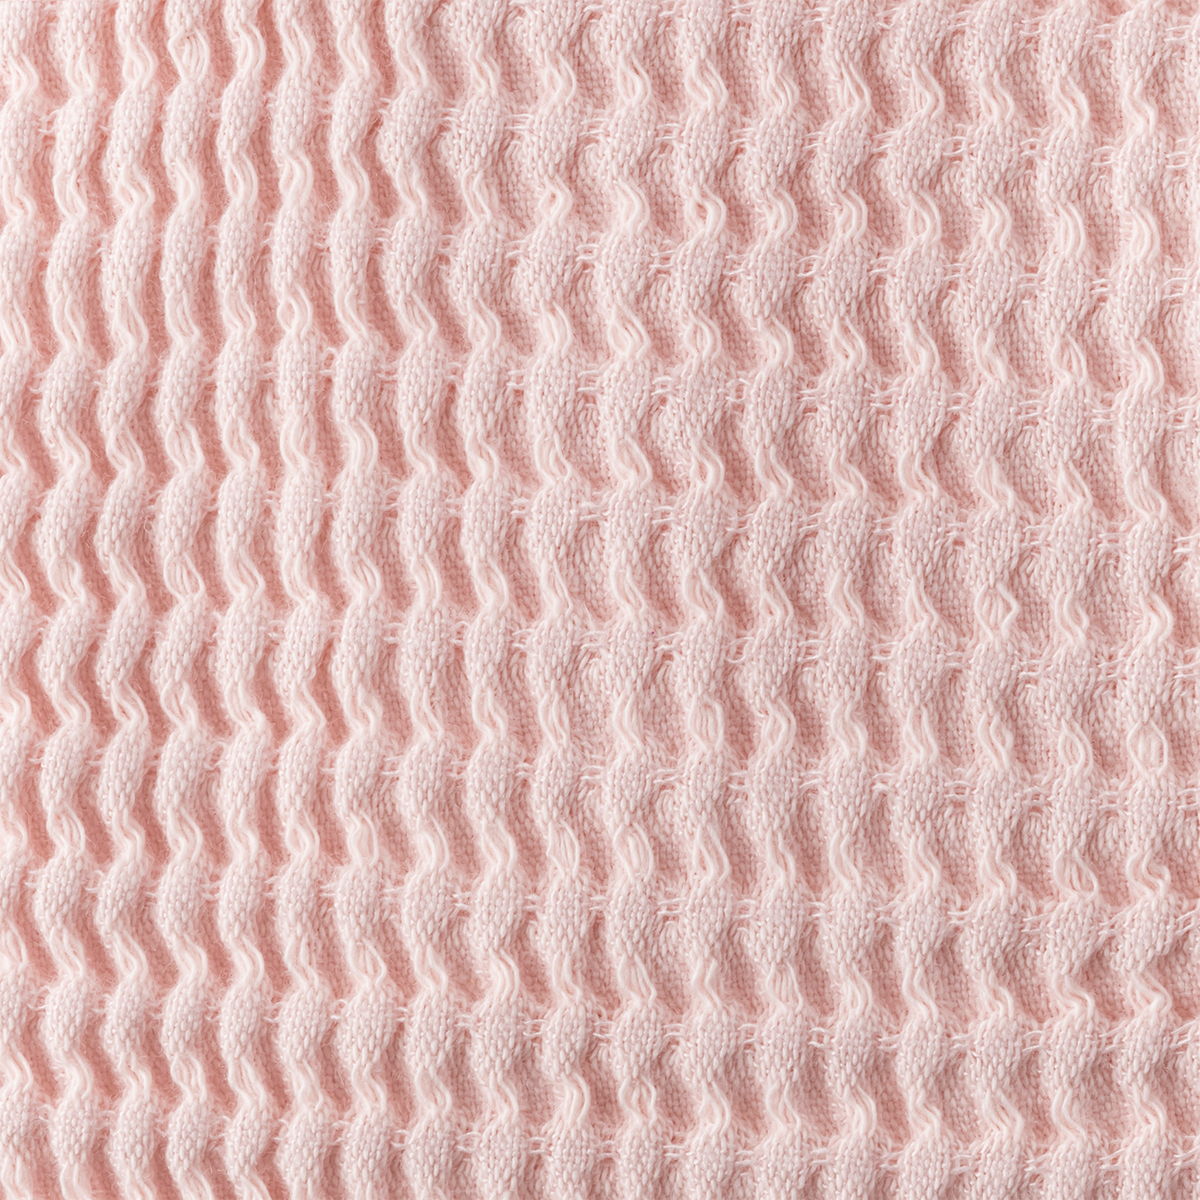 Fabric Closeup of Matouk Kiran Waffle Bath Robe in Blush Color